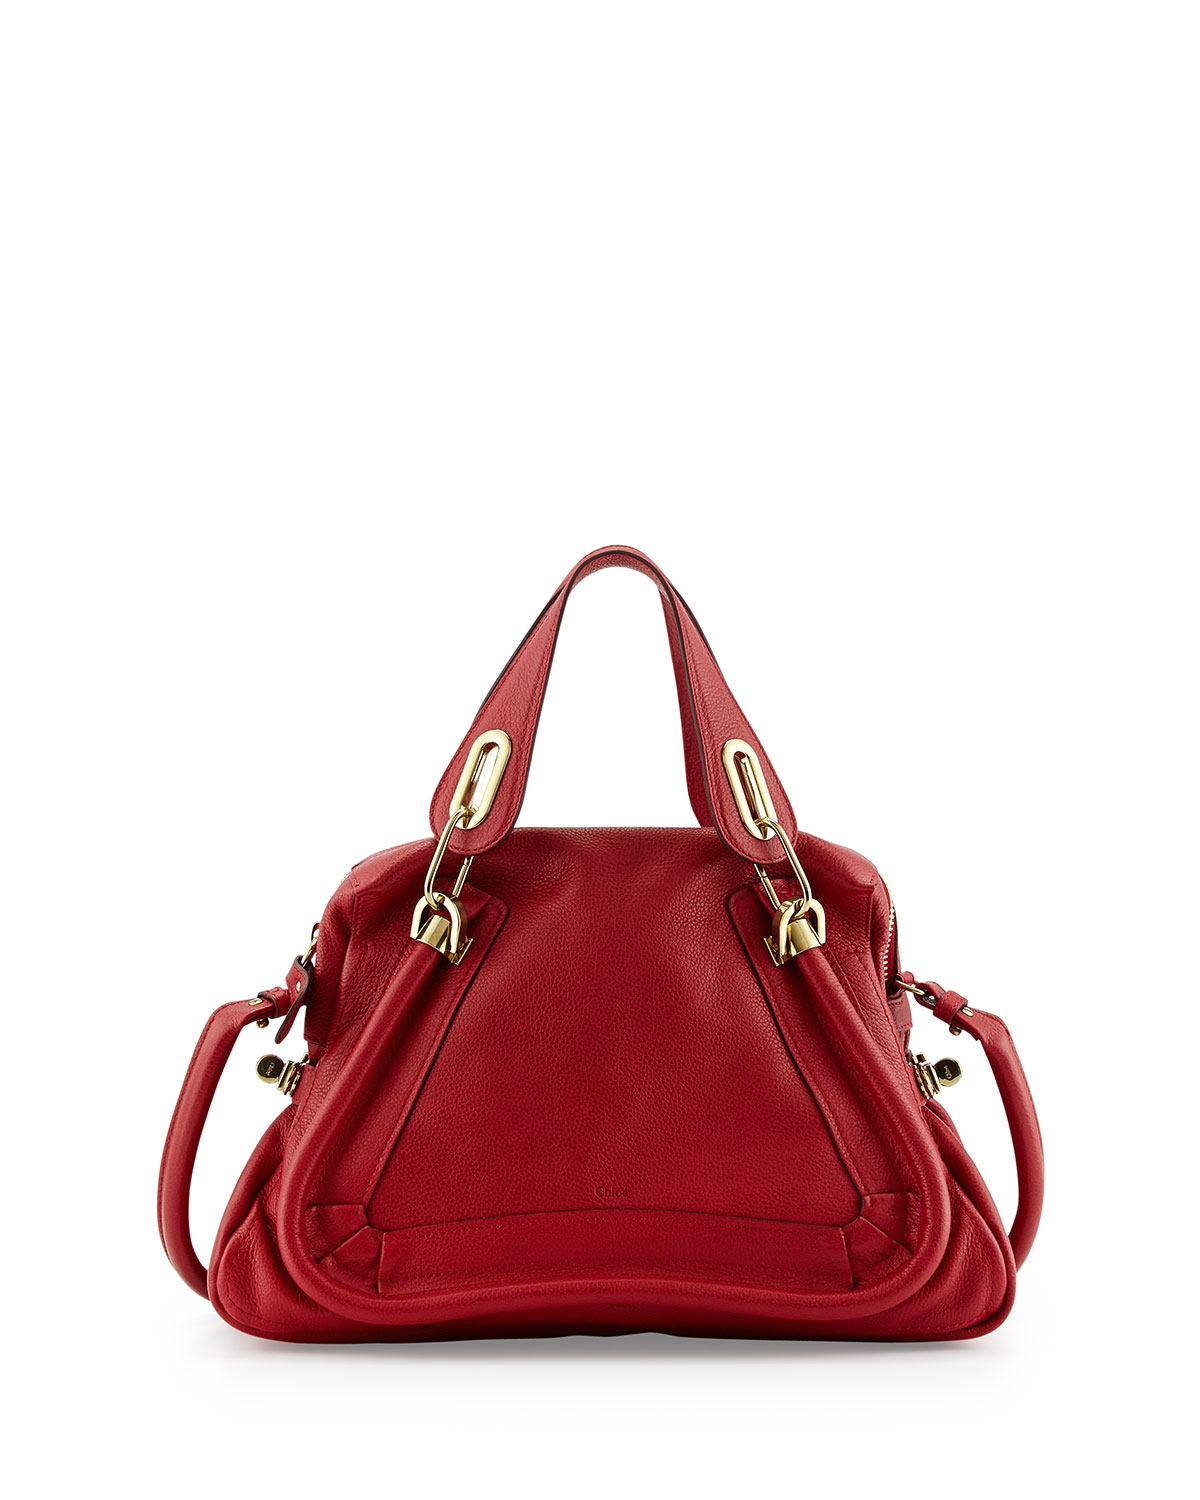 Lyst - Chloé Paraty Medium Satchel Bag in Red